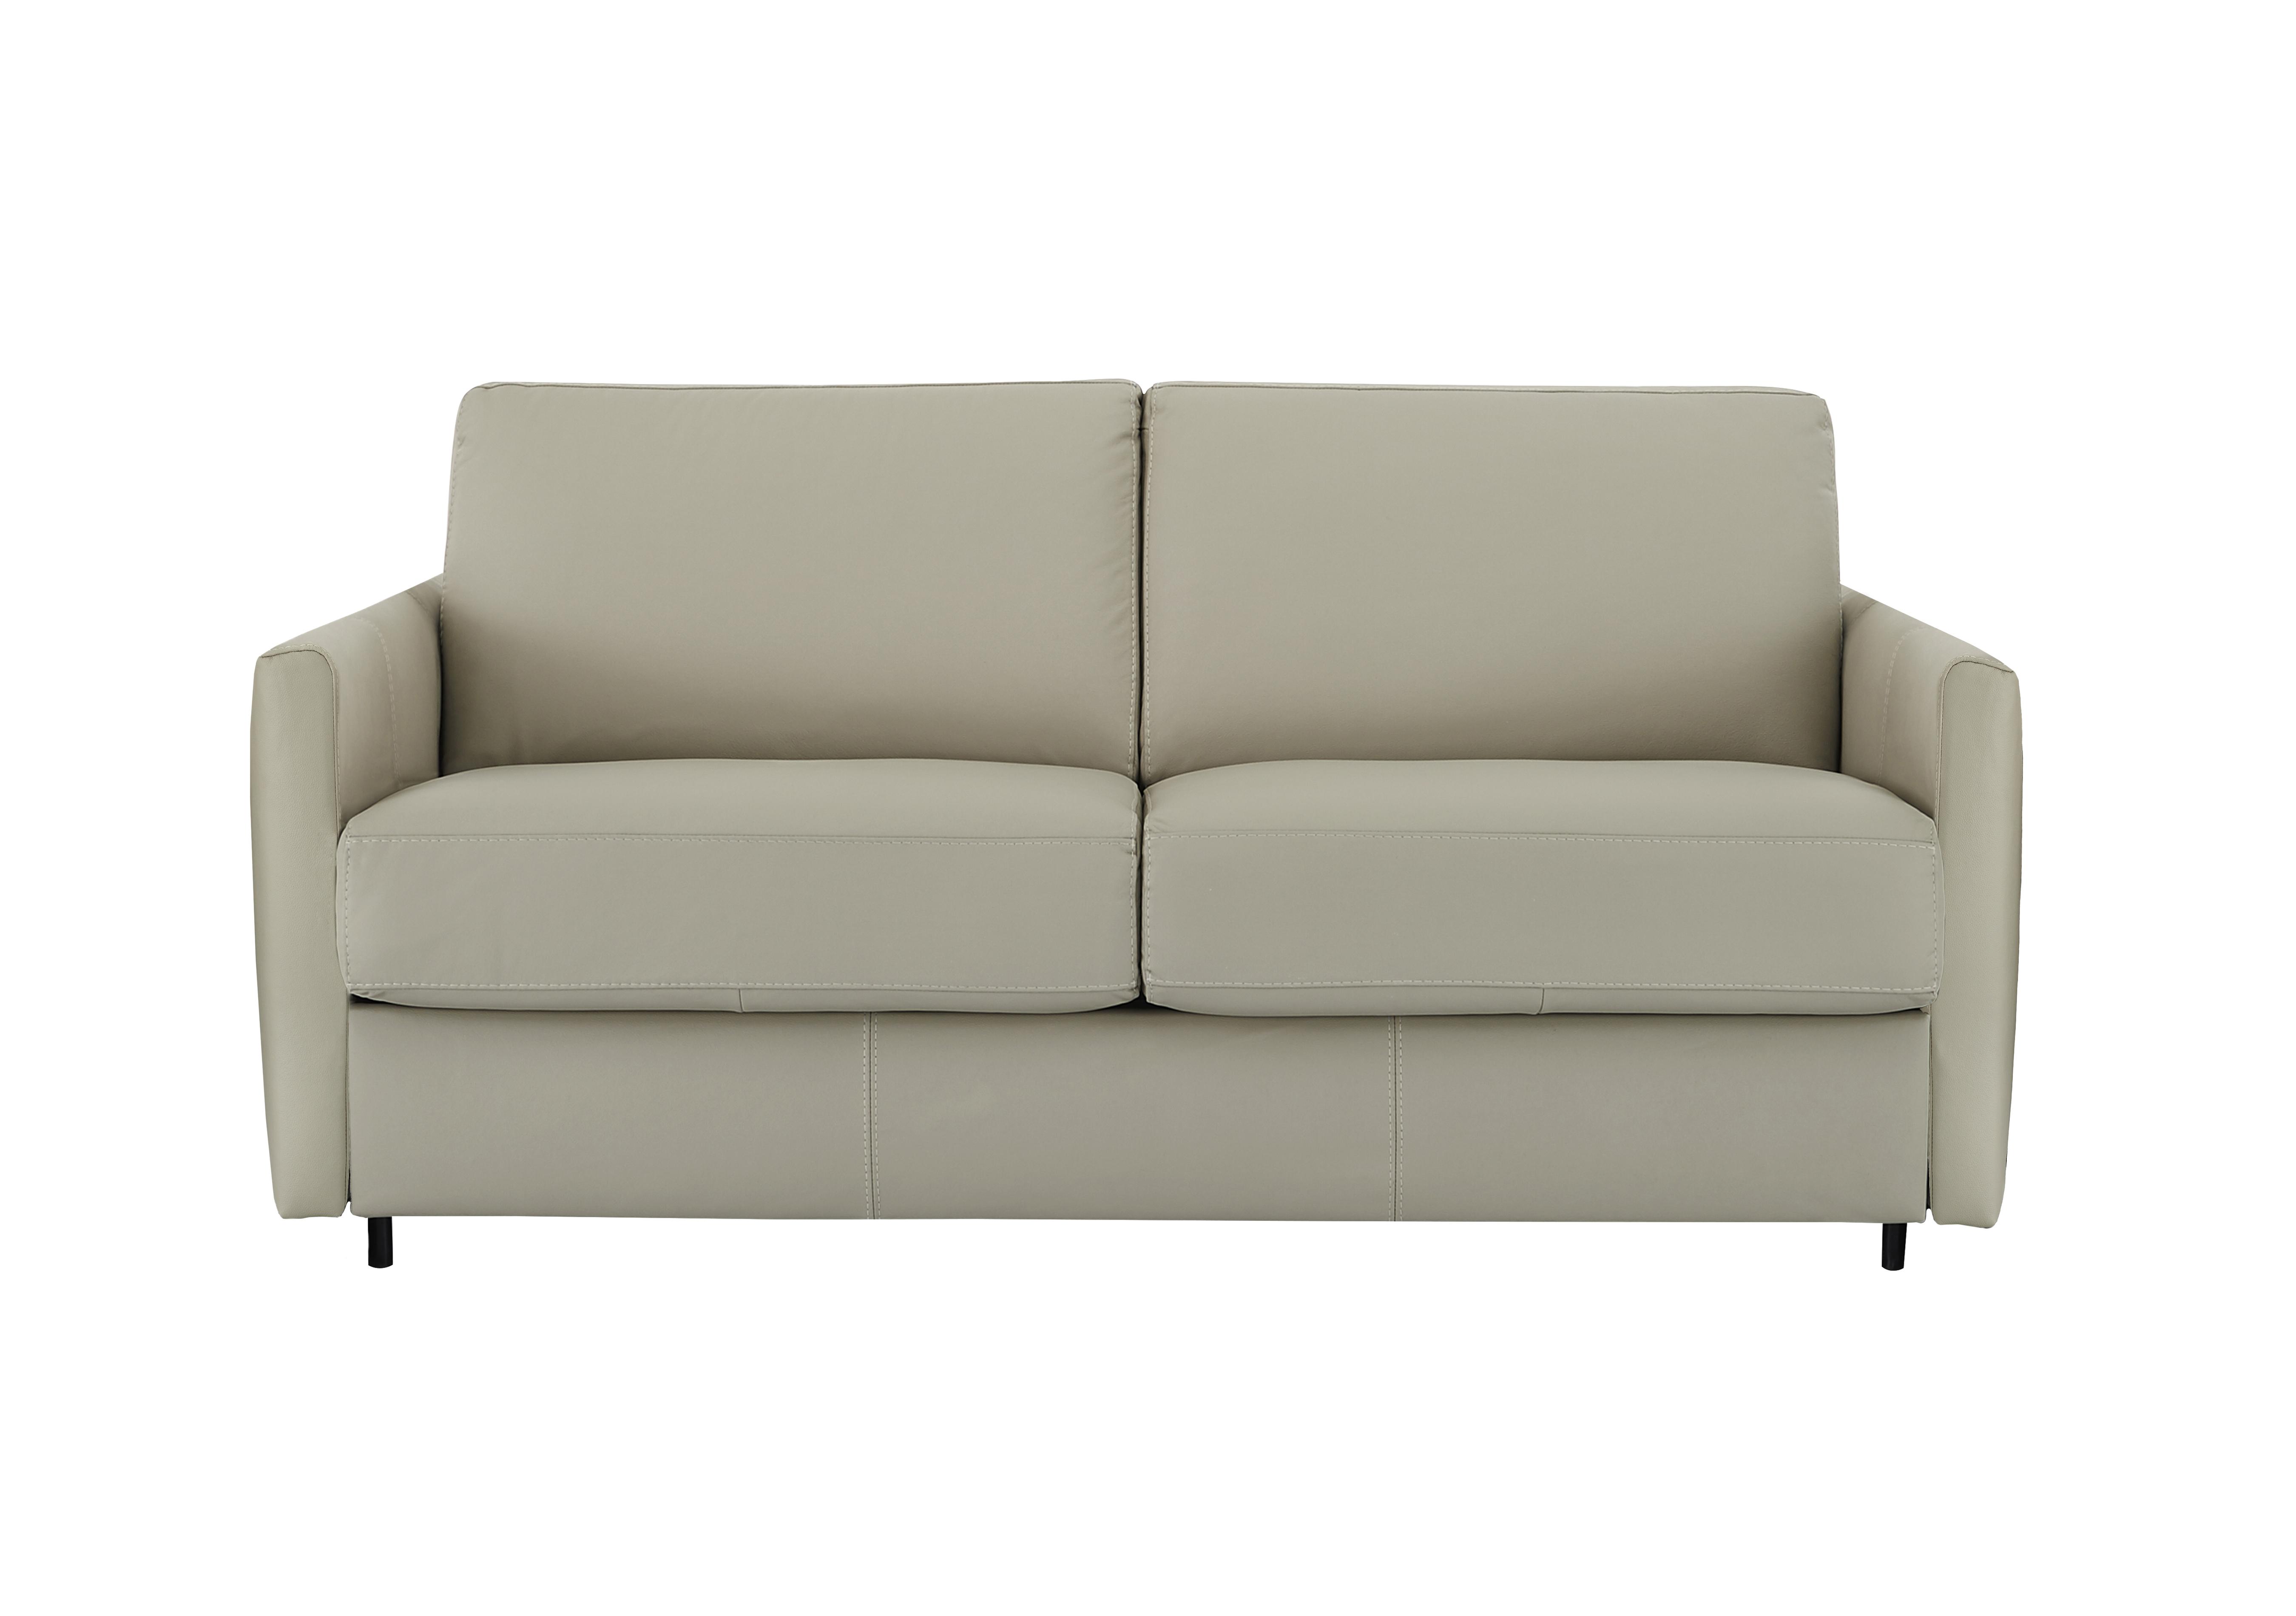 Alcova 2.5 Seater Leather Sofa Bed with Slim Arms in Torello Tortora 328 on Furniture Village